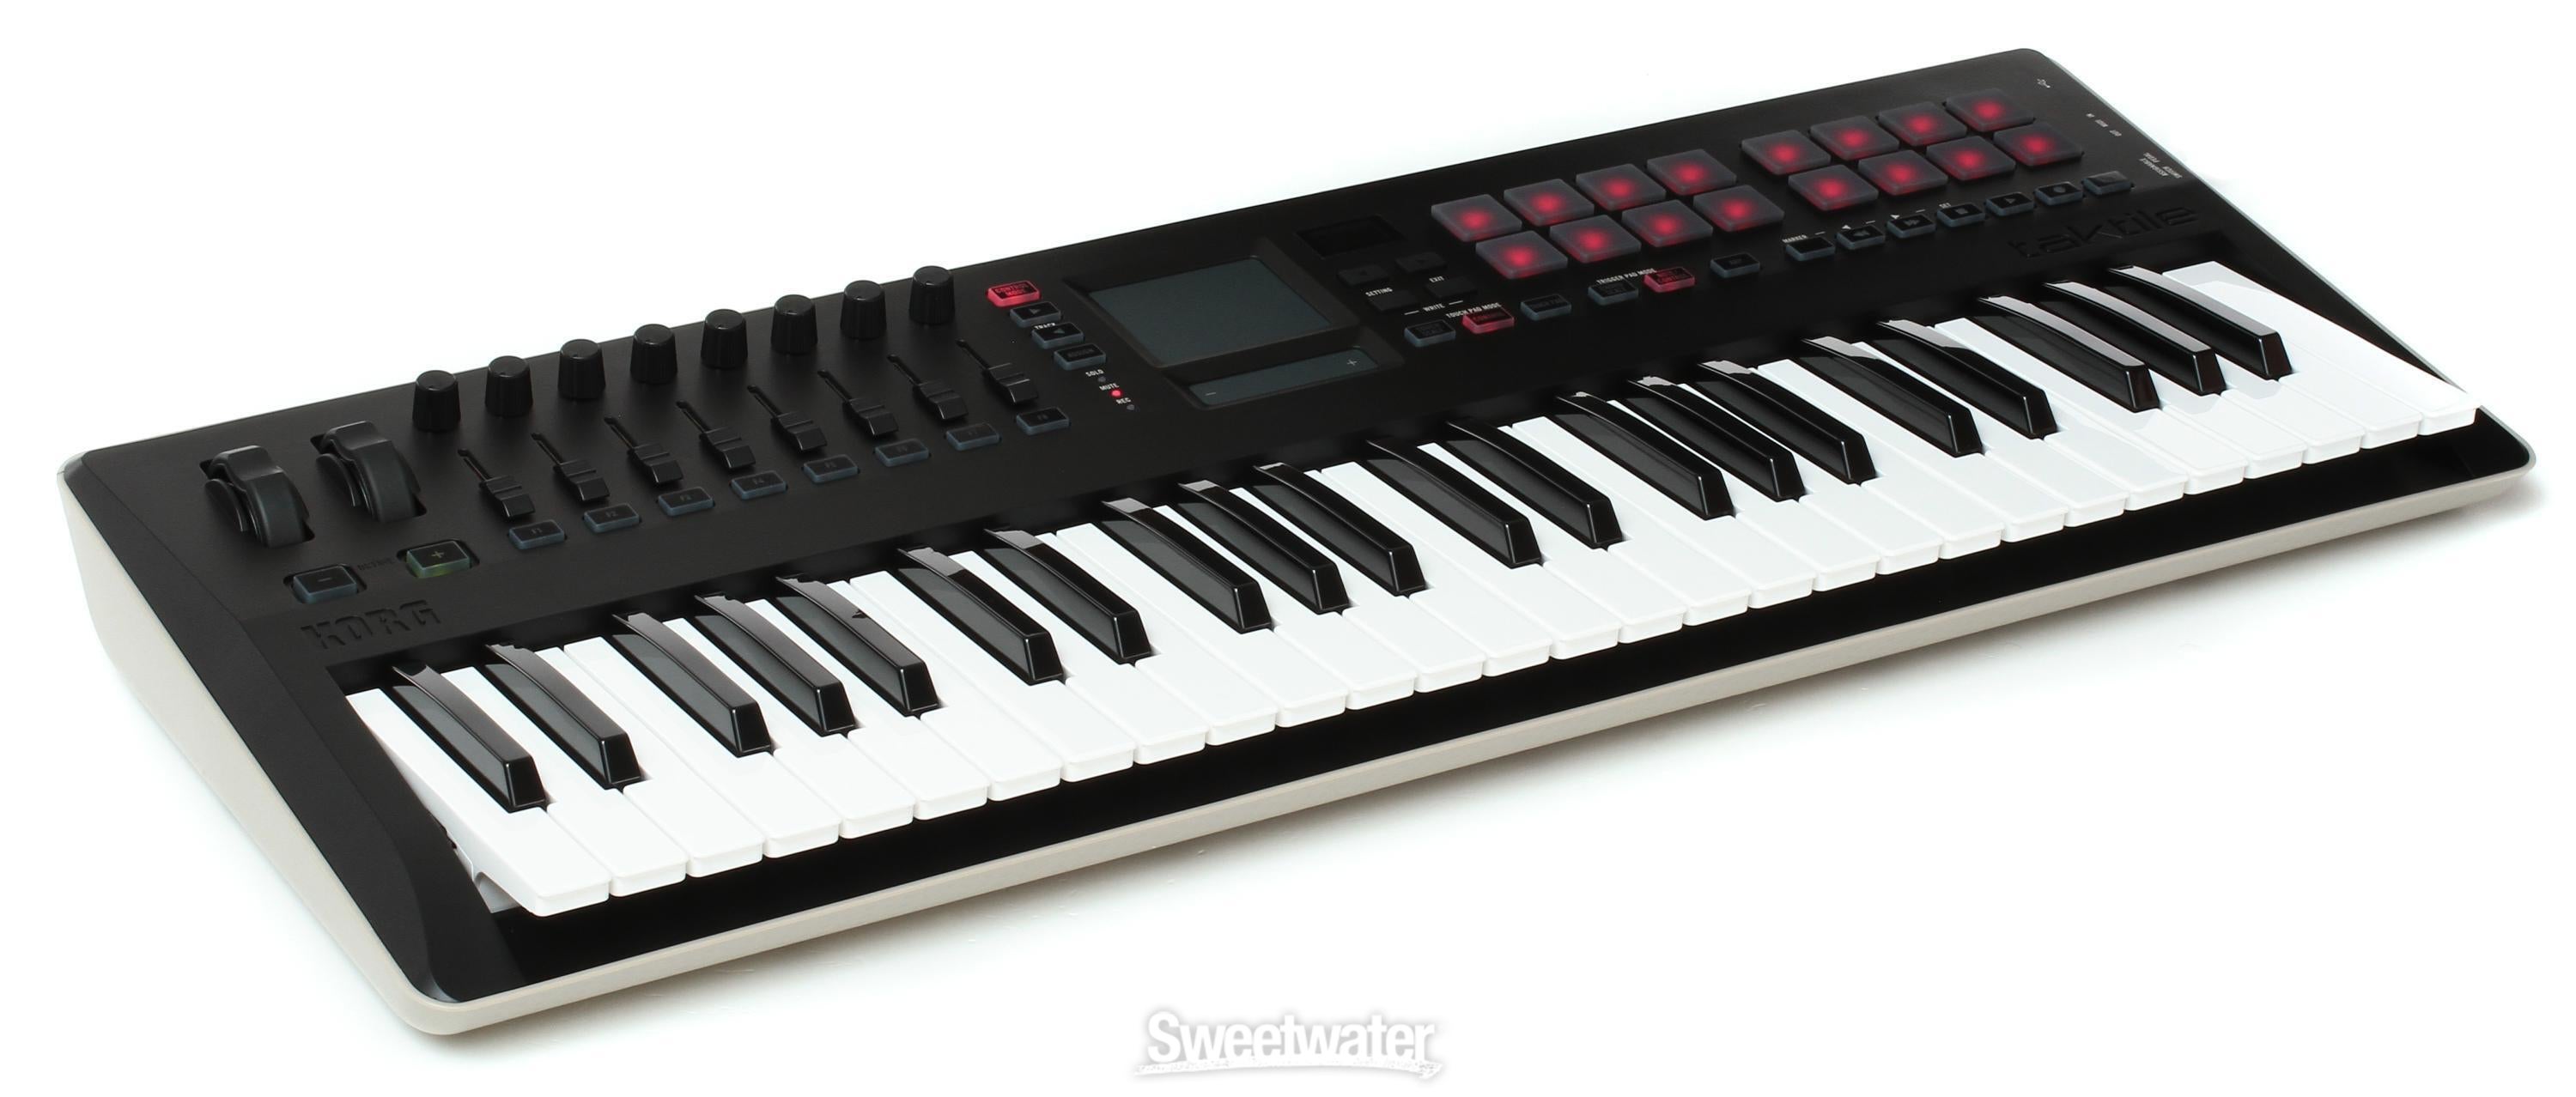 KORG USB MIDI キーボード TRITON taktile-49 - 鍵盤楽器